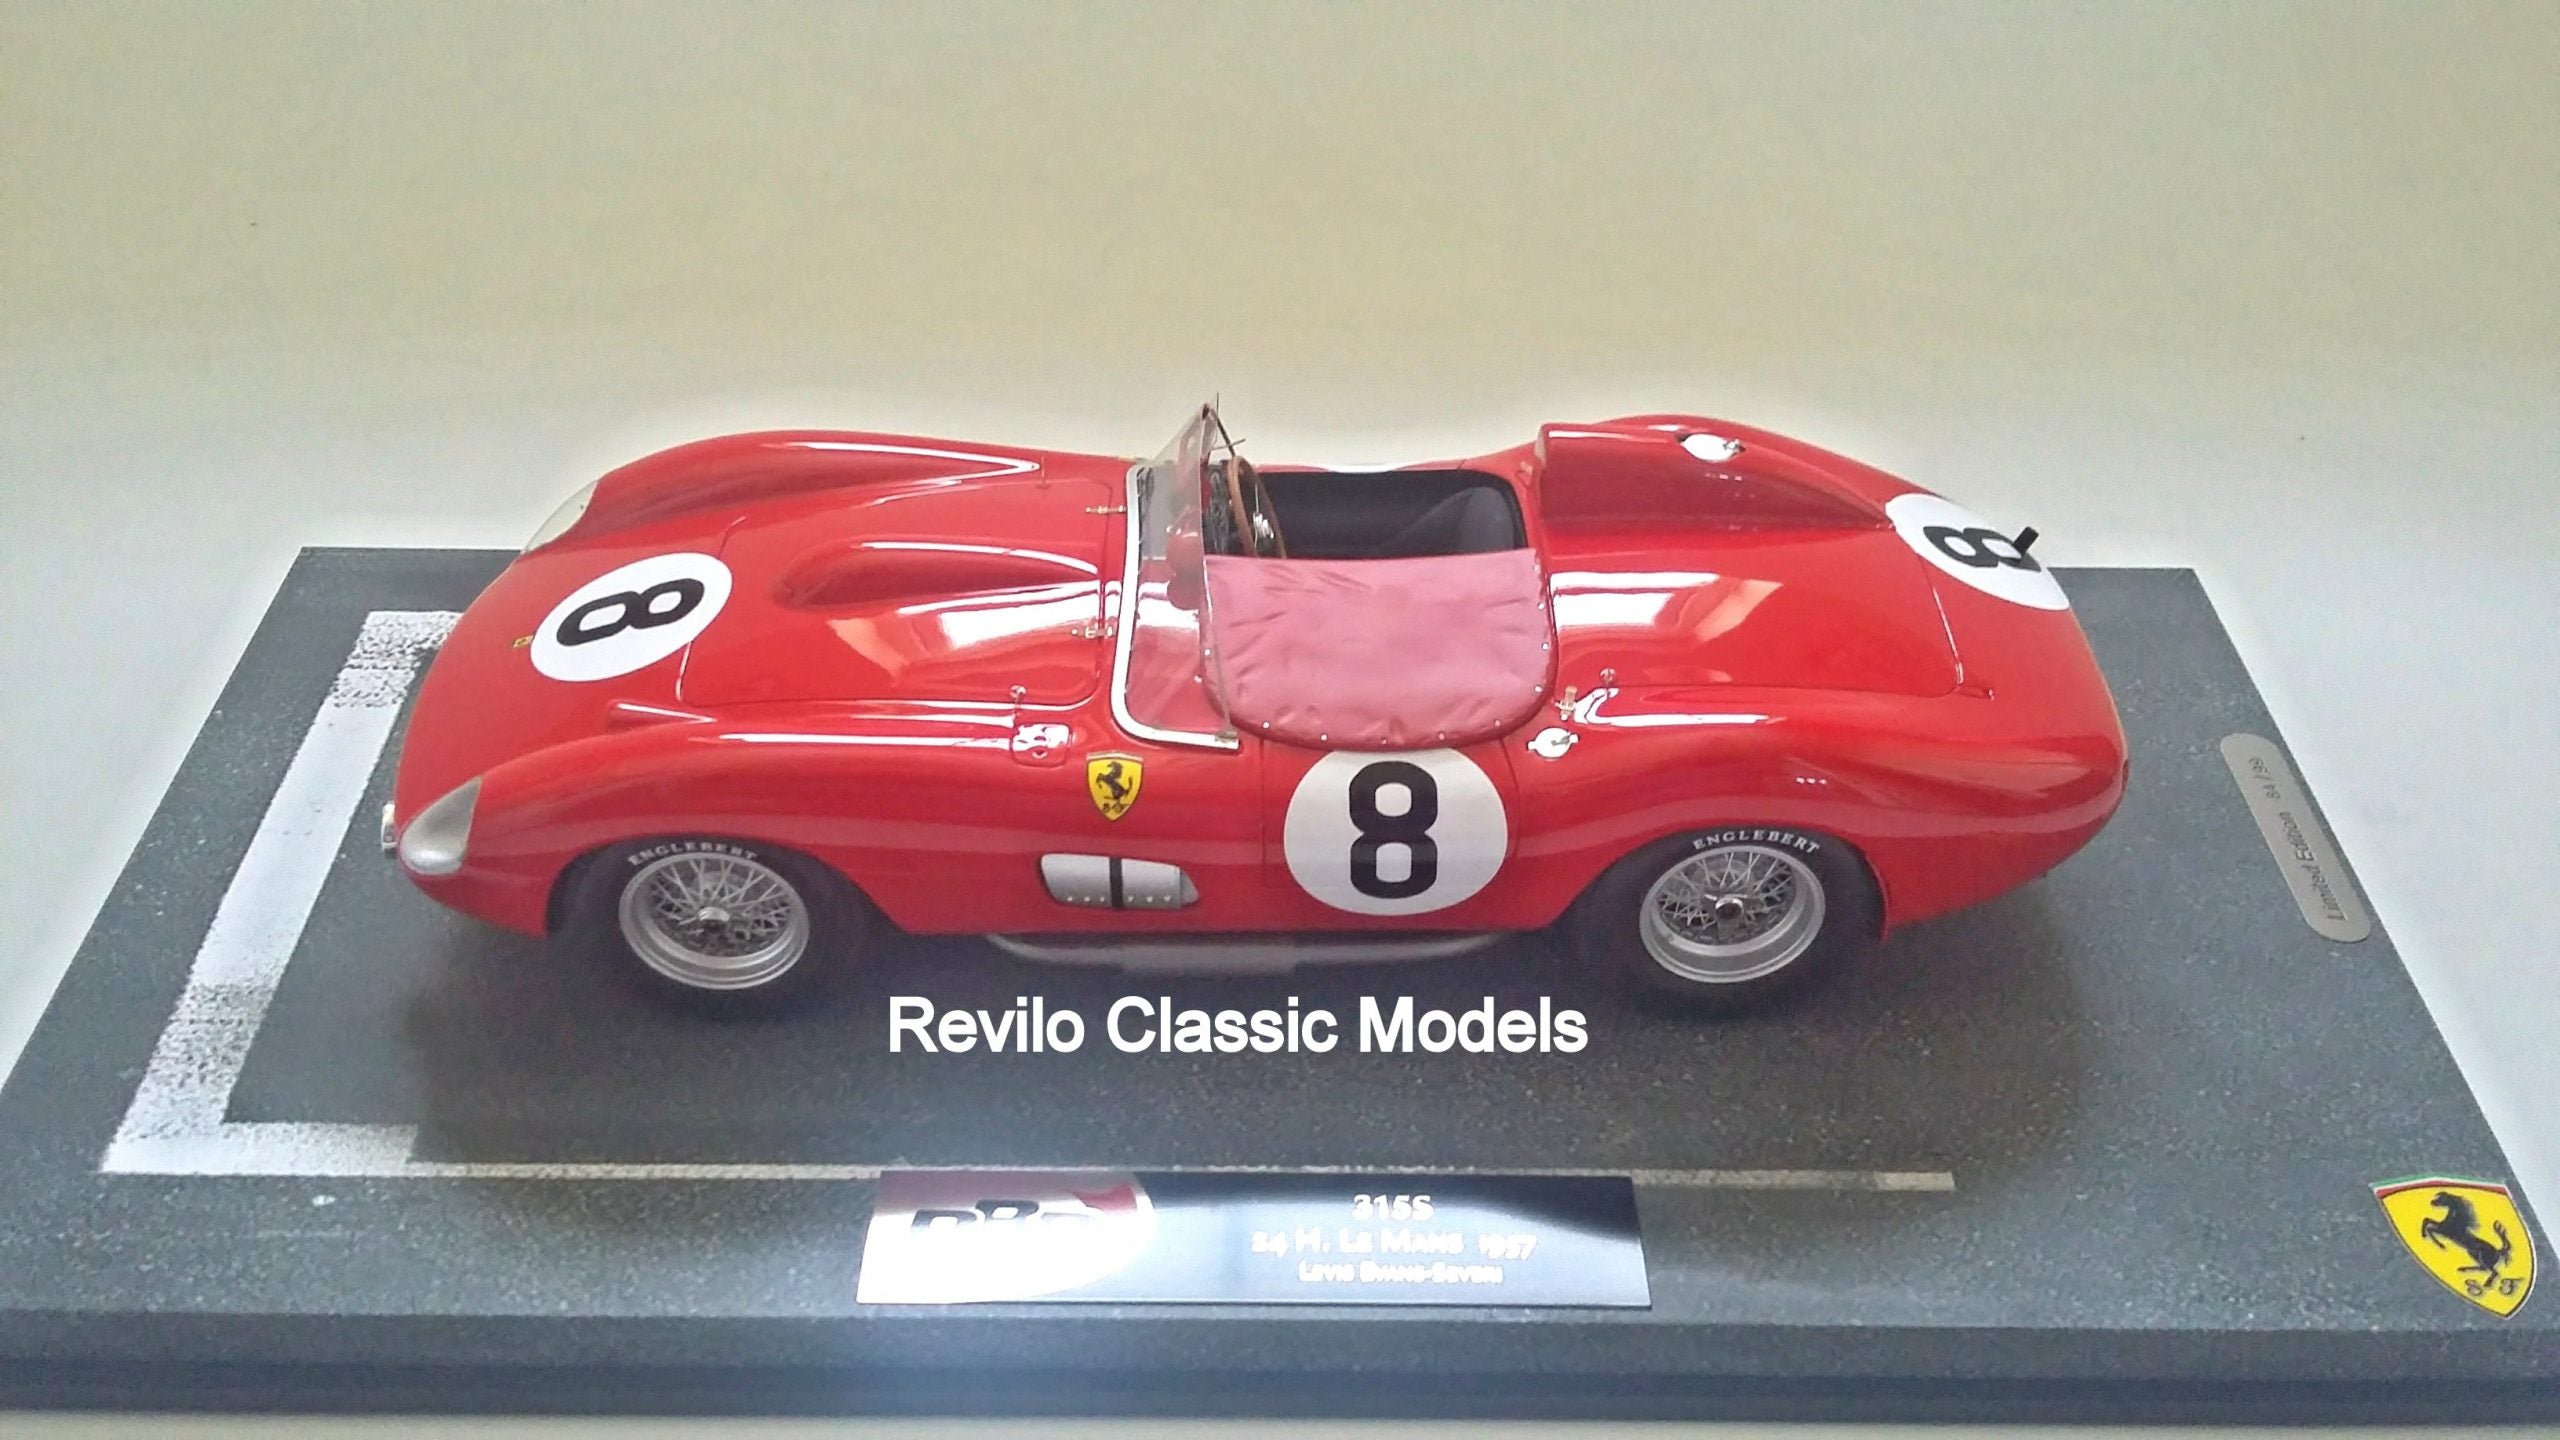 BBR Ferrari 315S 1957 Le Mans 1:18 scale